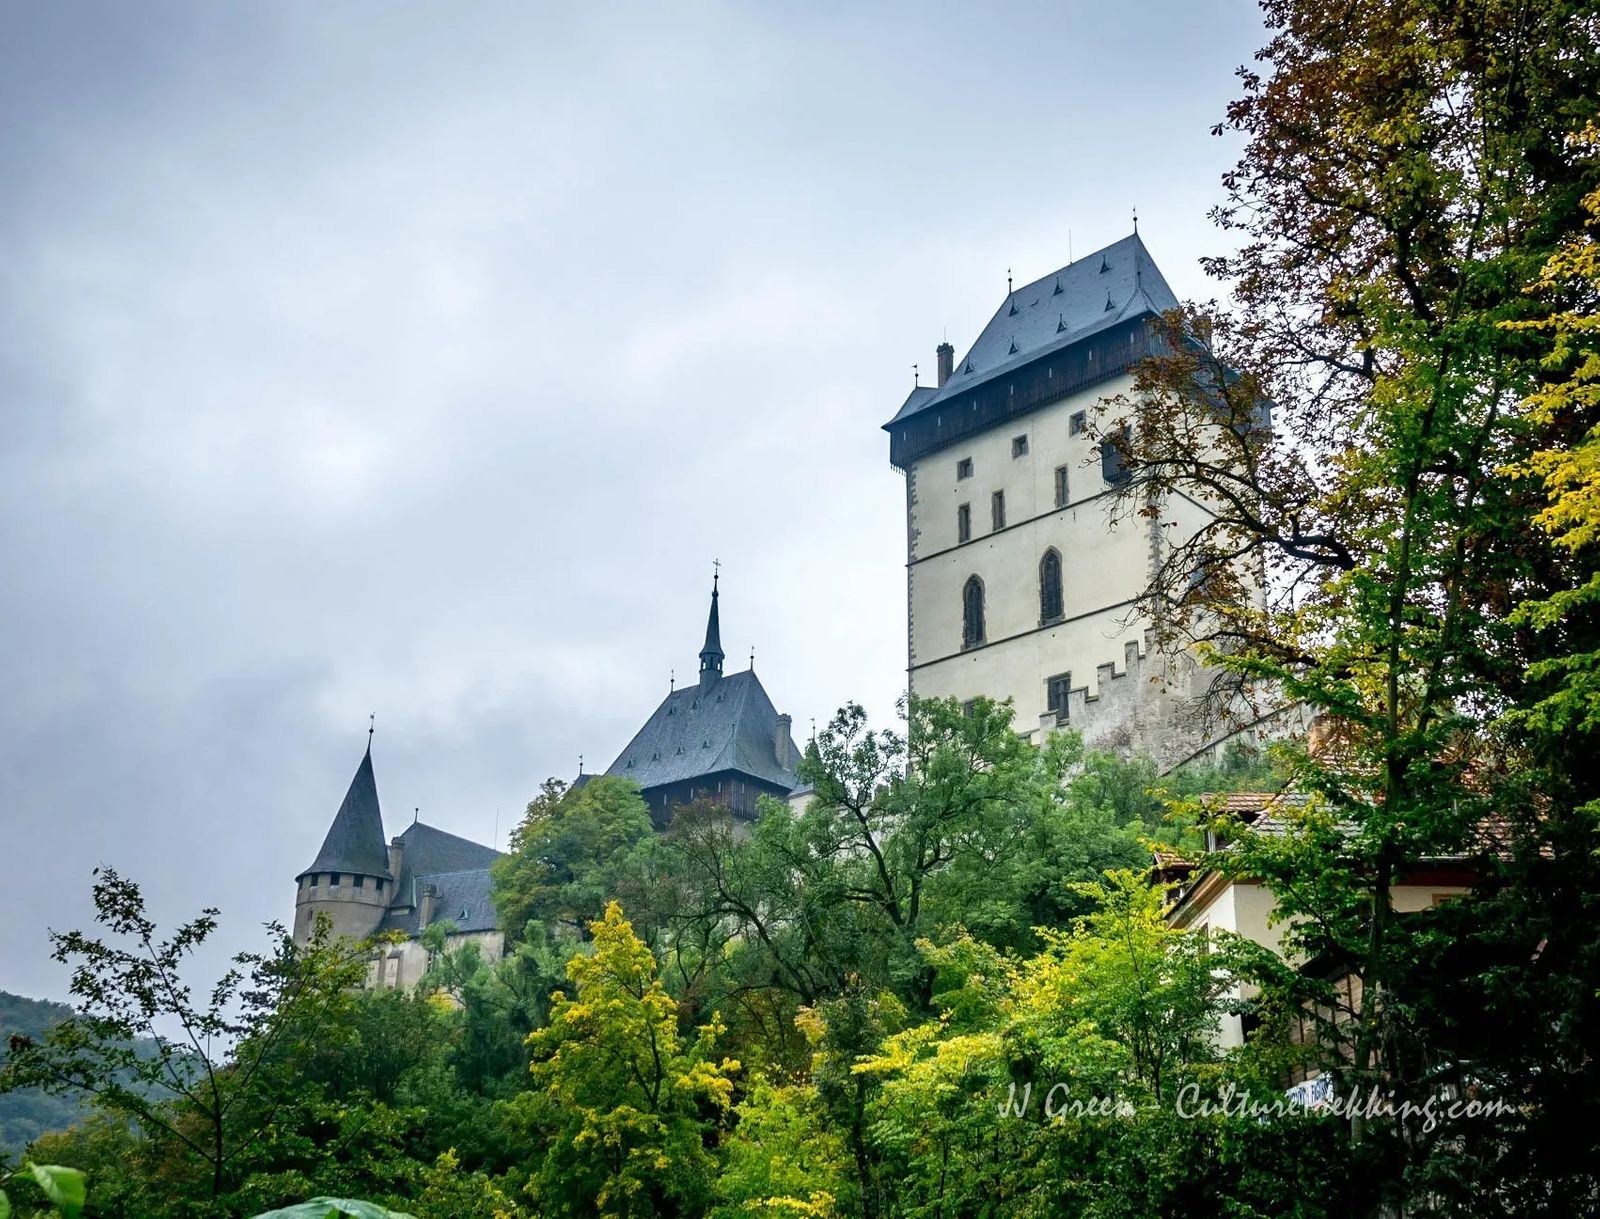 Karlstejn Castle in the Czech Republic. A storybook castle like none other in Europe..